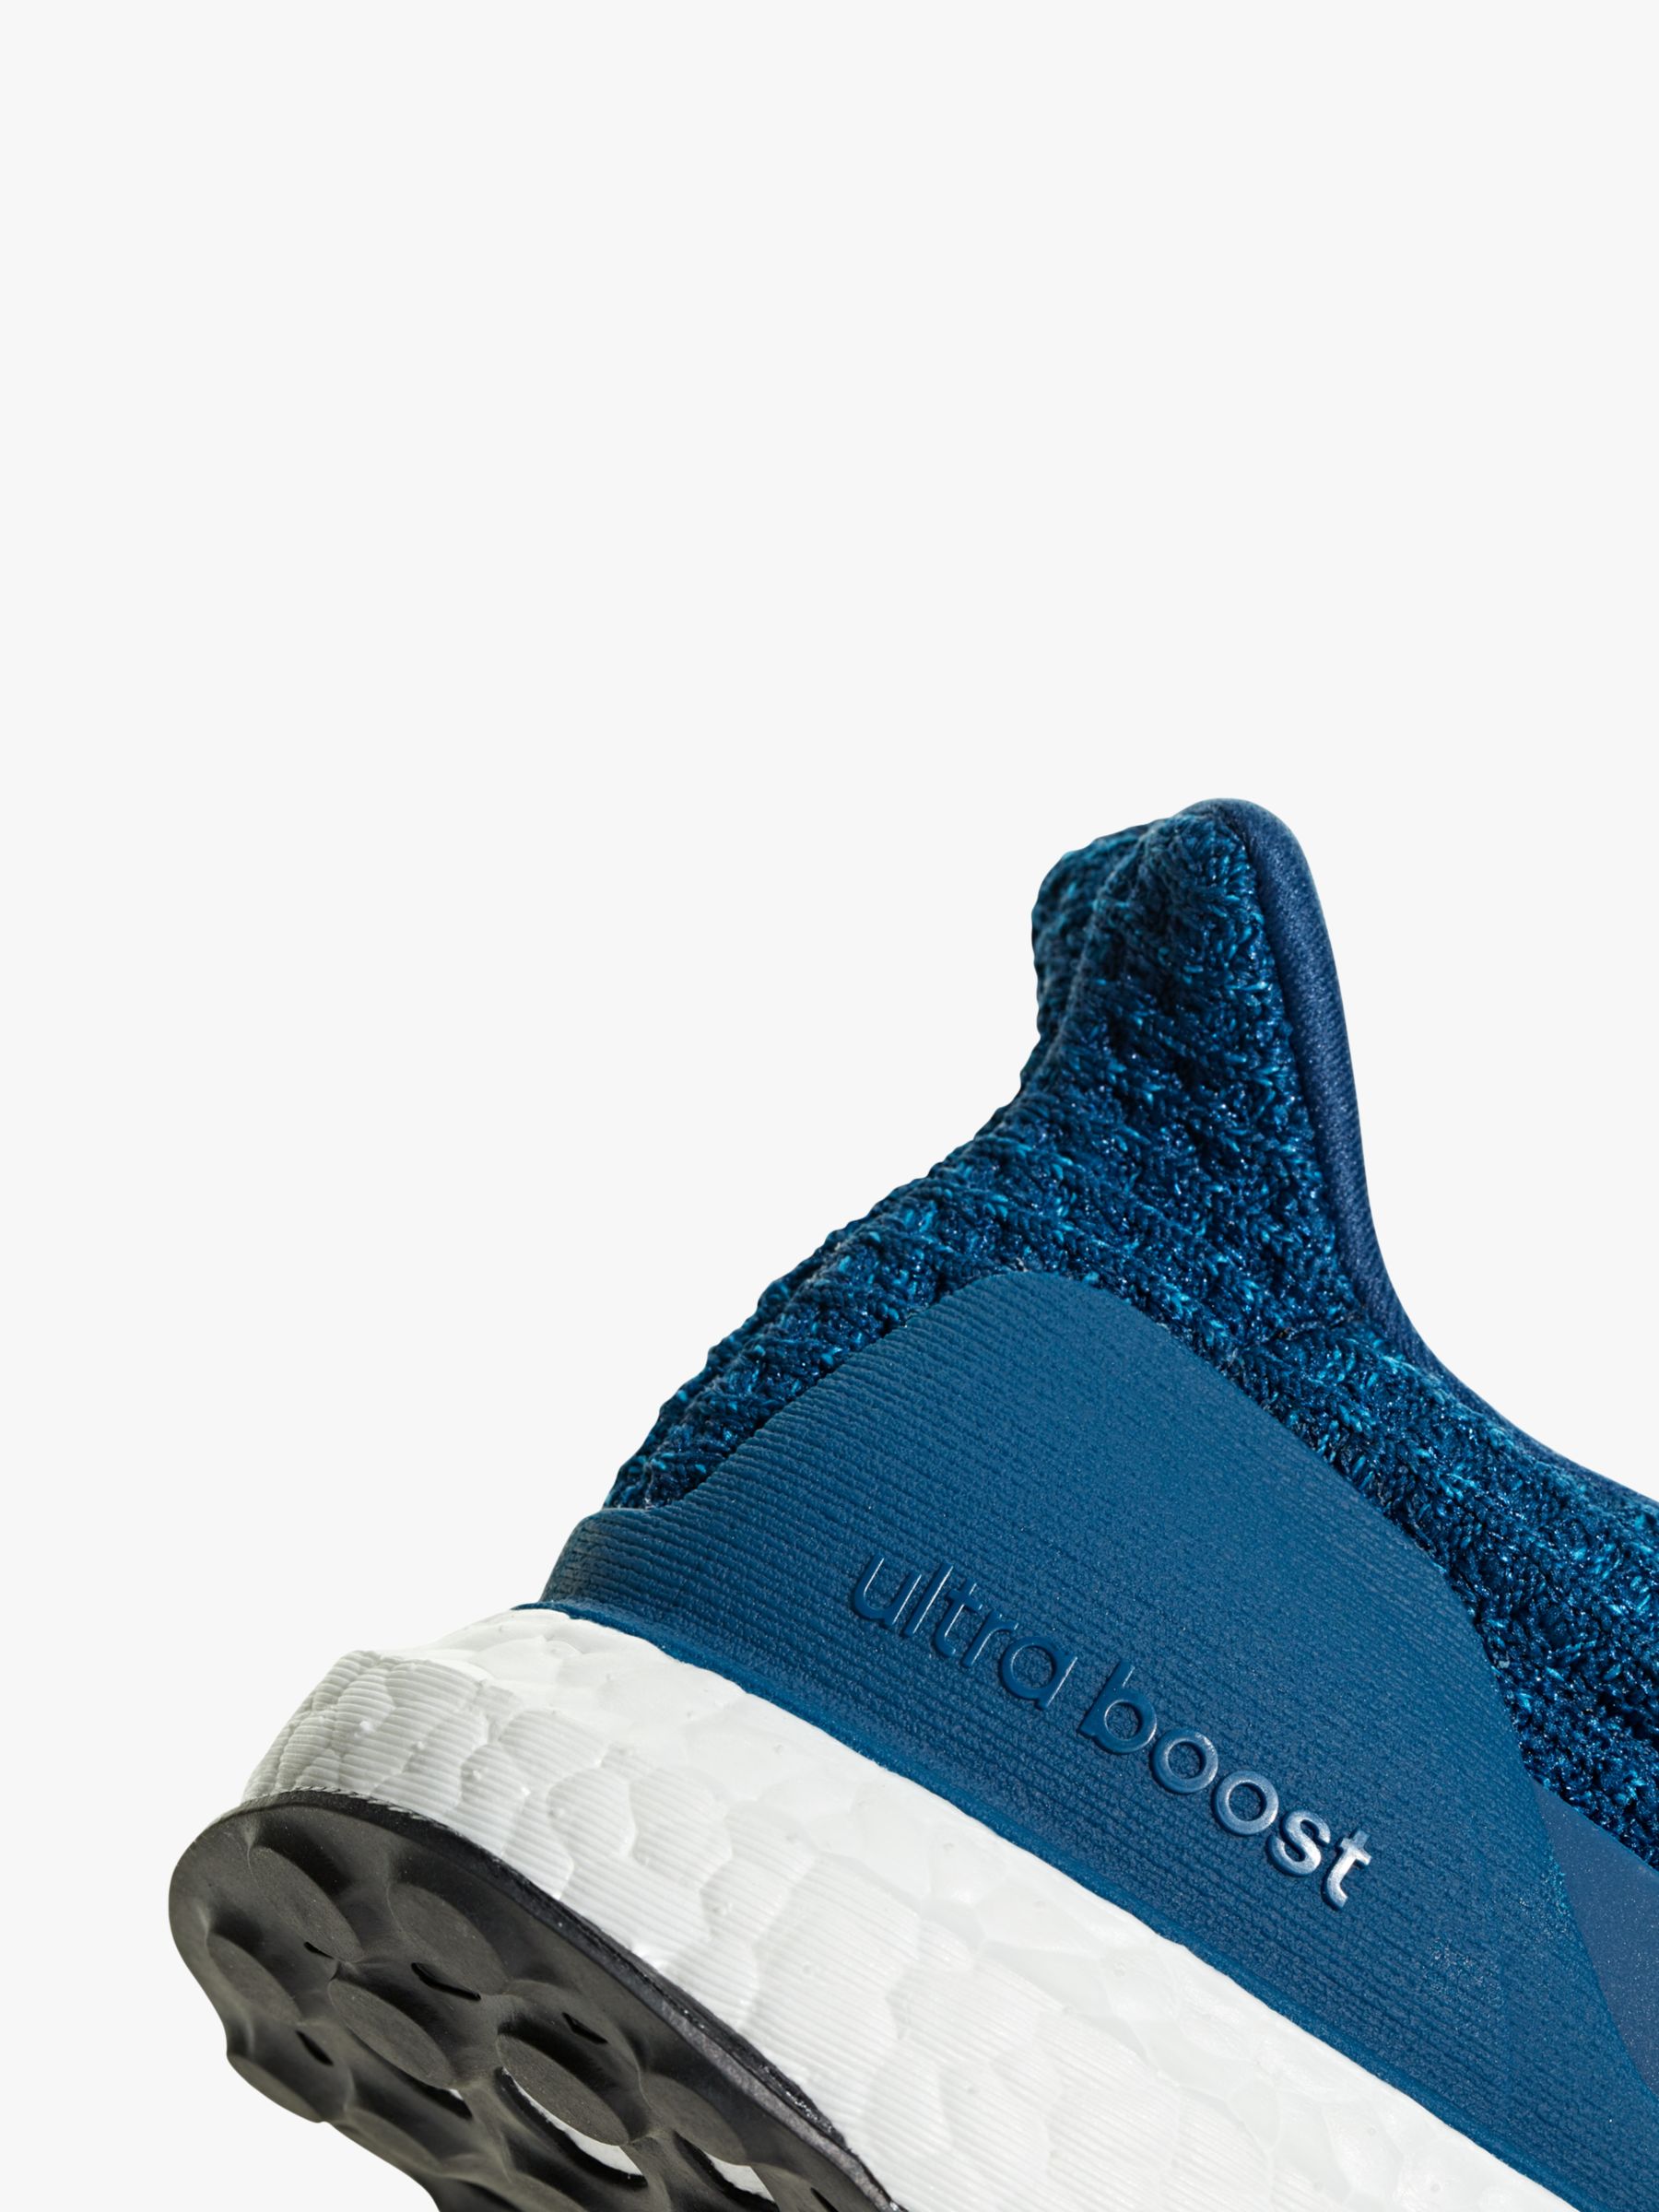 adidas ultraboost running shoes for men